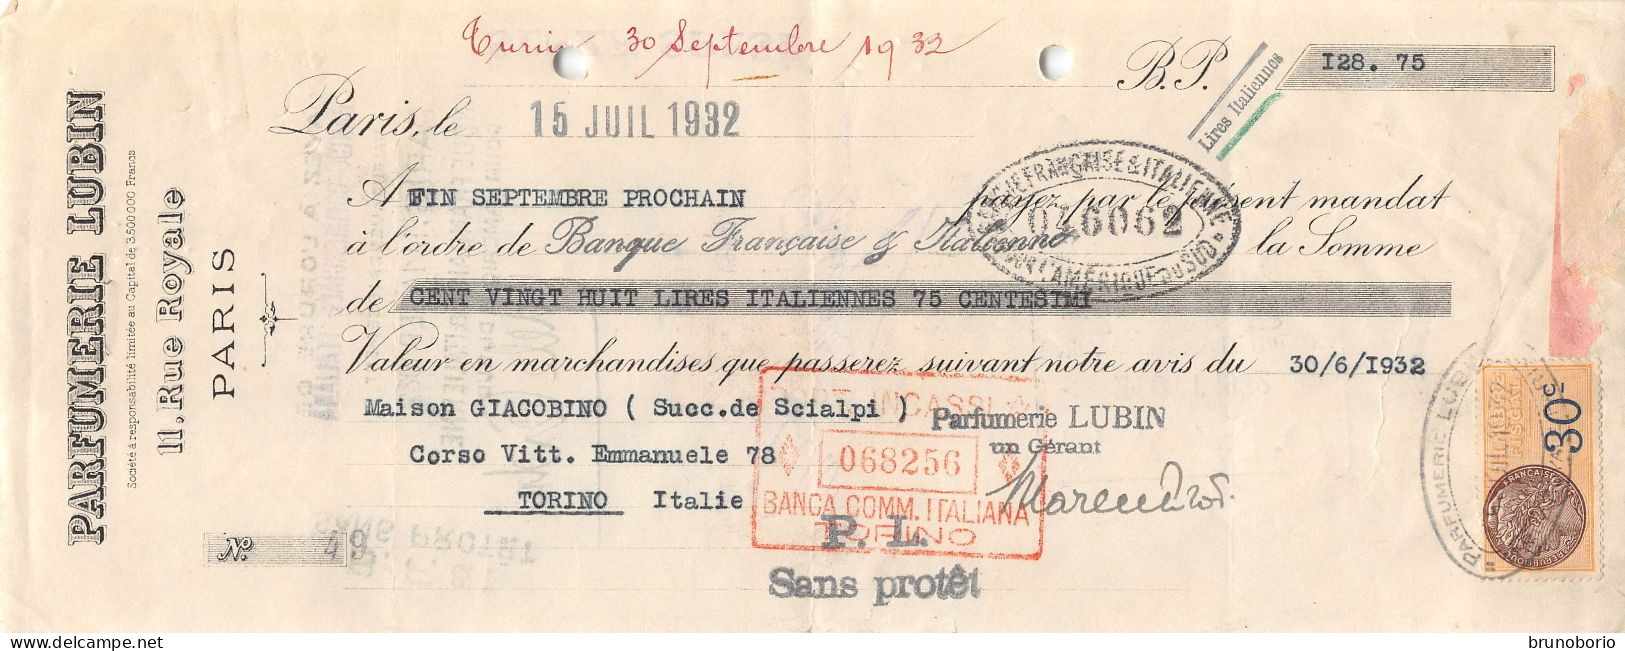 00158 "PARFUMERIE LUBIN- PARIS  - DITTA GIACOBINO -TORINO . CAMBIALE NR 49 - 15 JUIL 1932-BANCA COMMERCIALE"  CAMB. ORIG - Bills Of Exchange